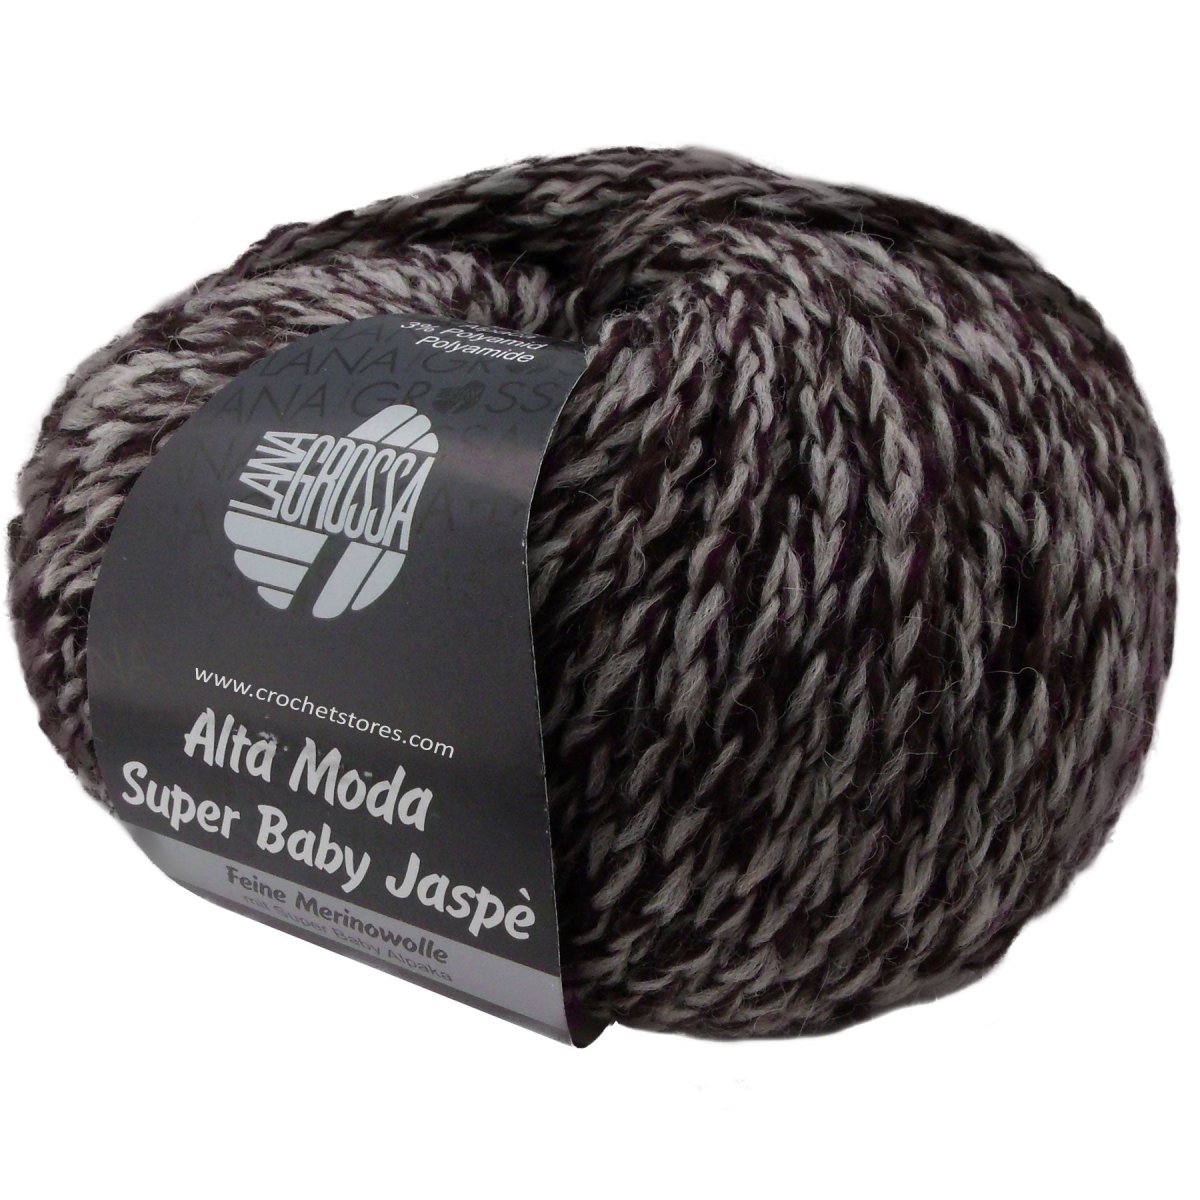 ALTA MODA SUPER BABY - Crochetstores779-01034033493163569